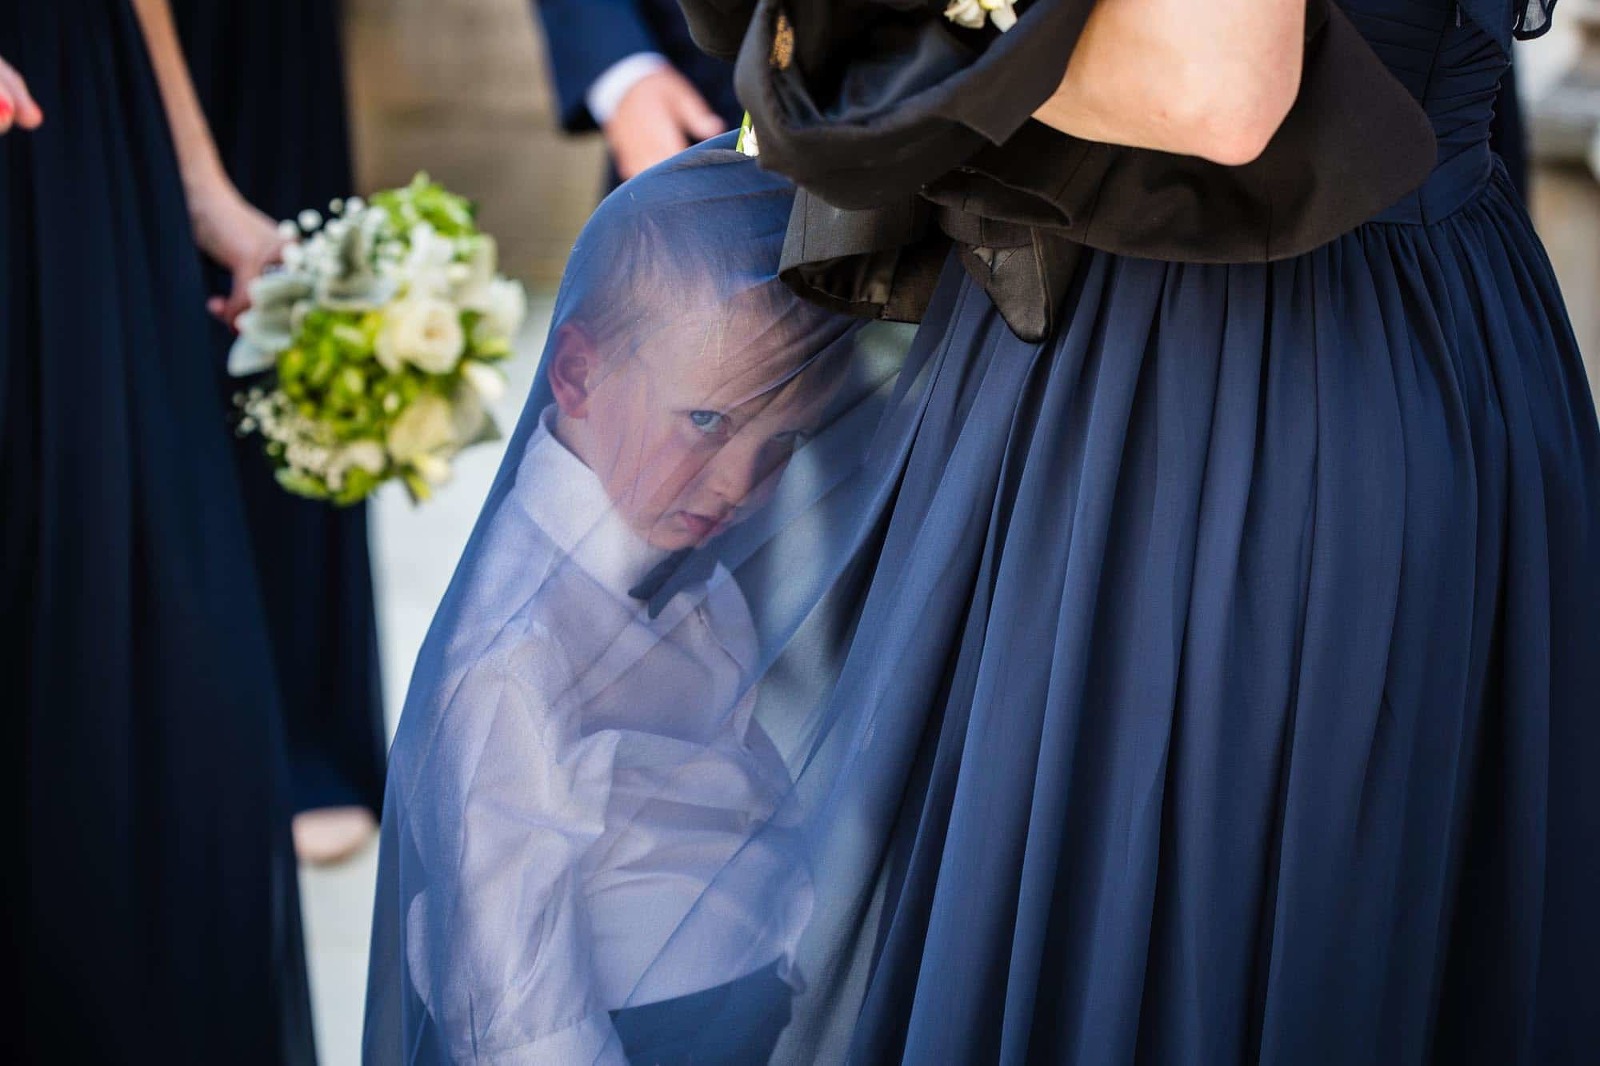 disgruntled ring bearer hiding under bridesmaid's dress, giving bored look